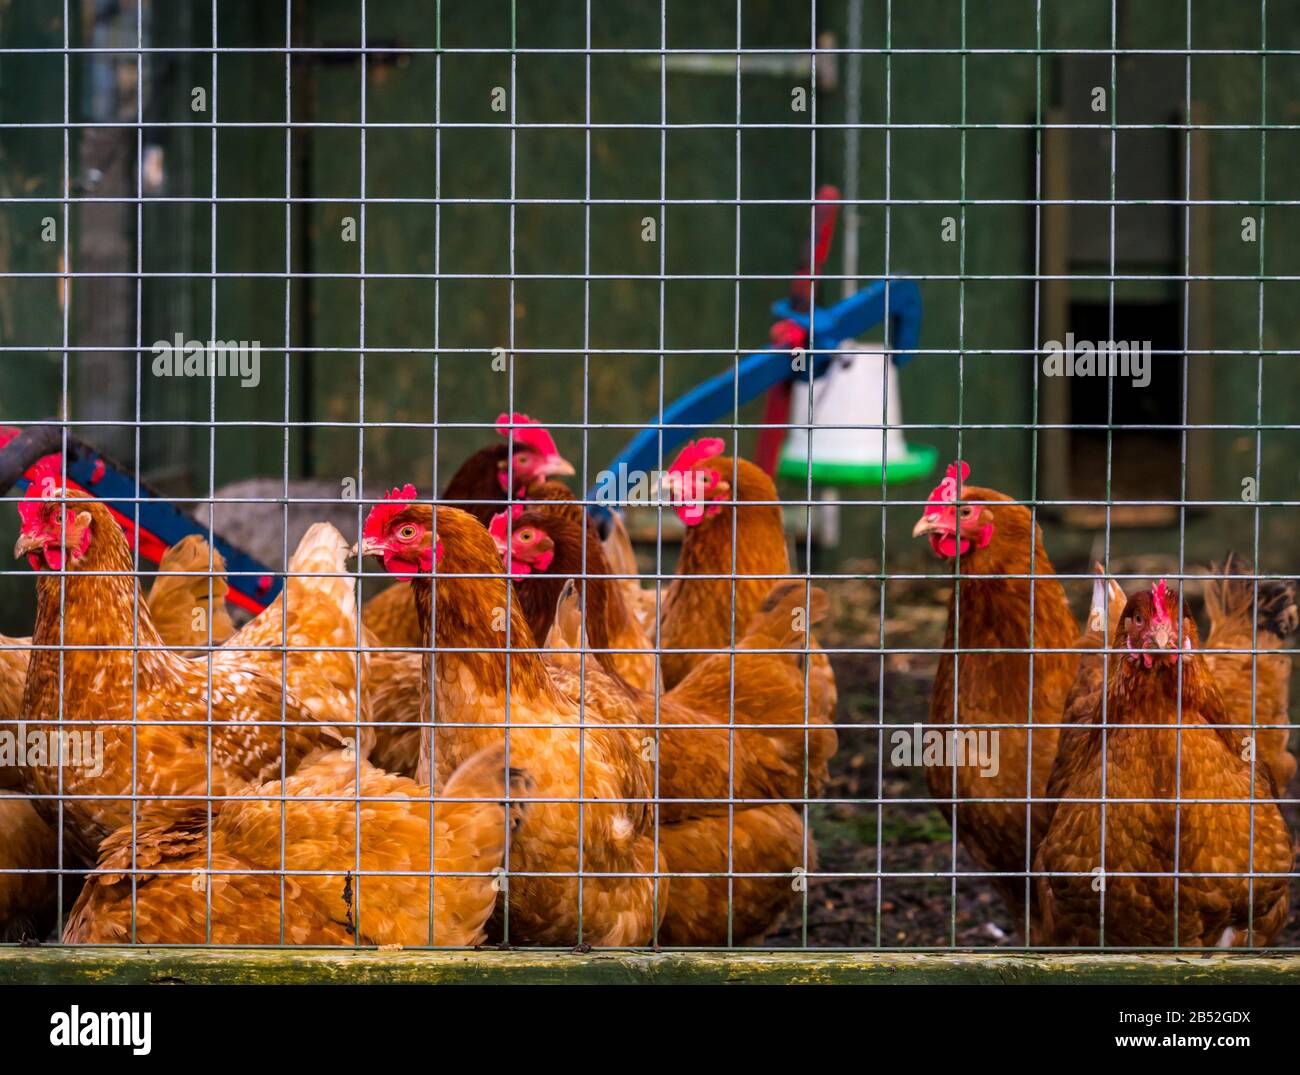 Chickens in a chicken coop pen, Love Gorgie City Farm, Edinburgh, Scotland, UK Stock Photo